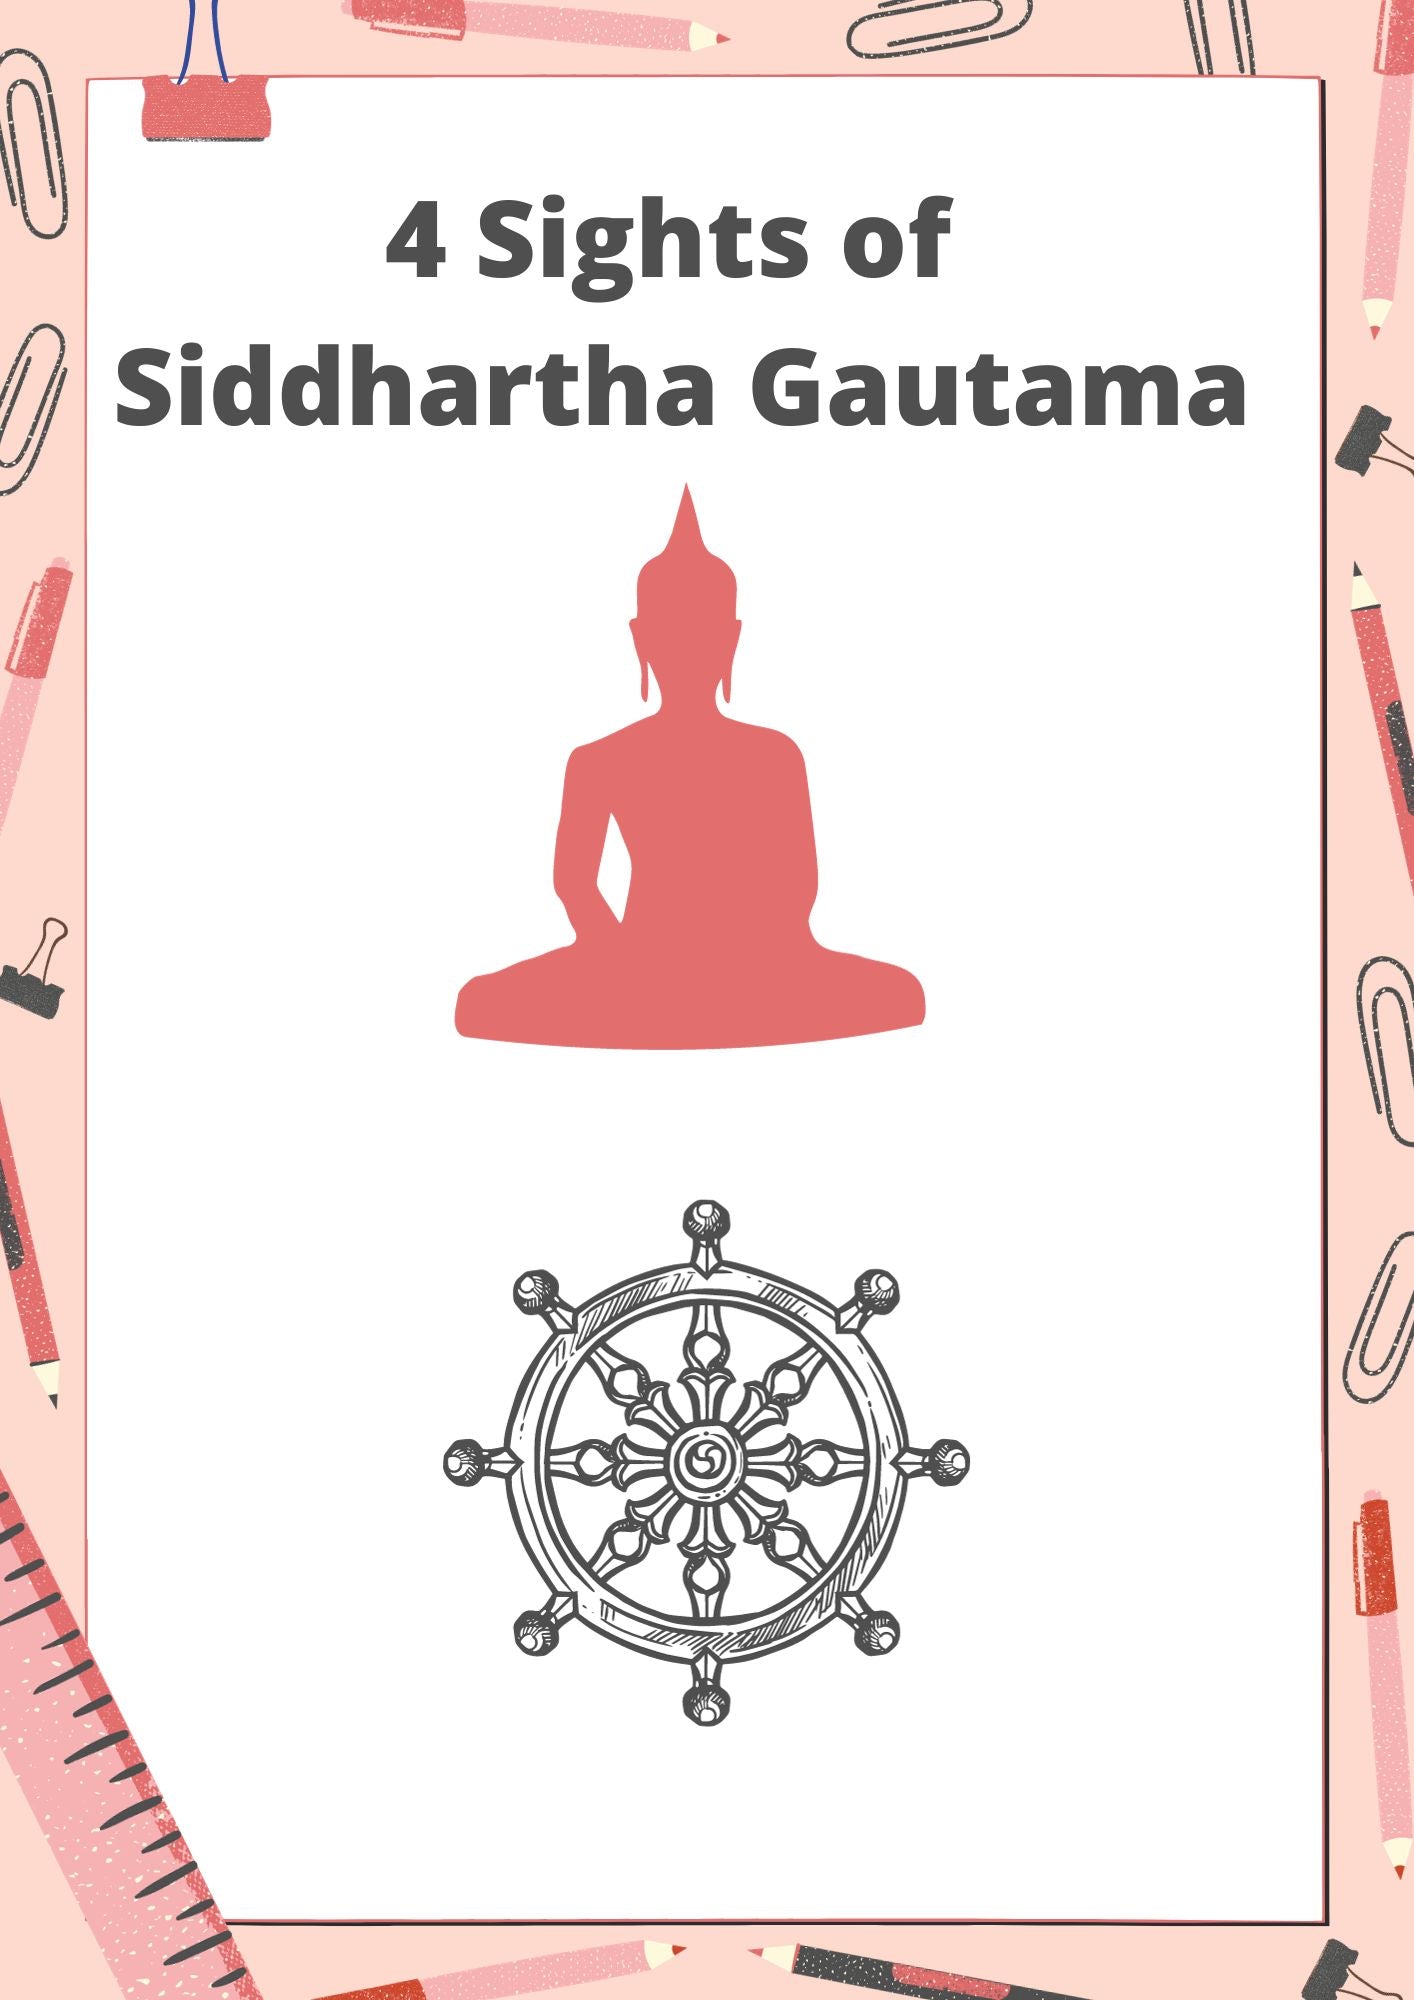 4 Sights of Siddhartha Gautama (Buddhism)